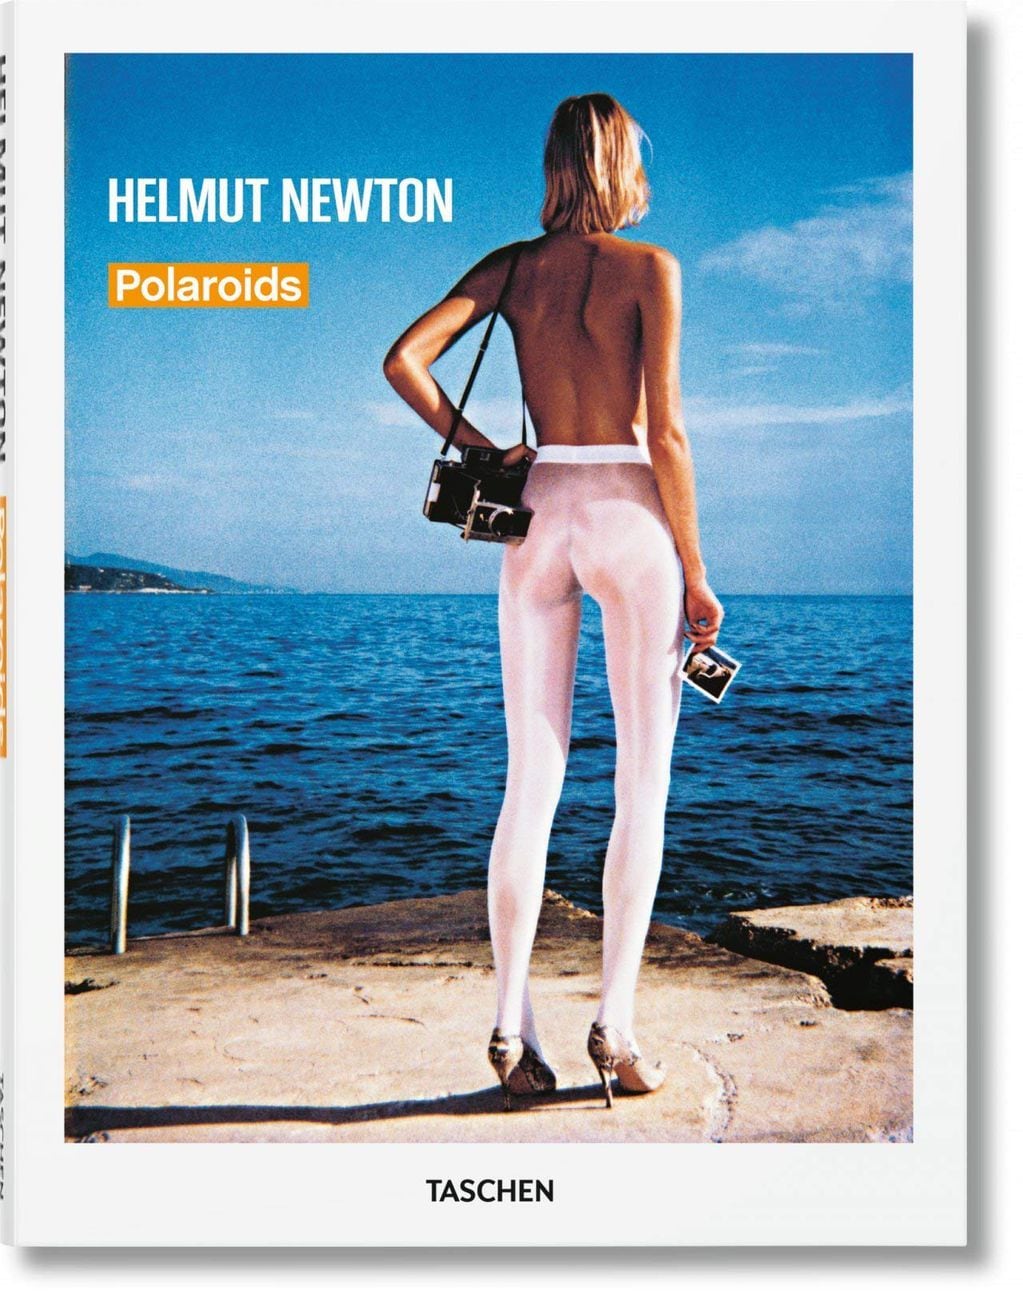 "Polaroids" Helmut Newton